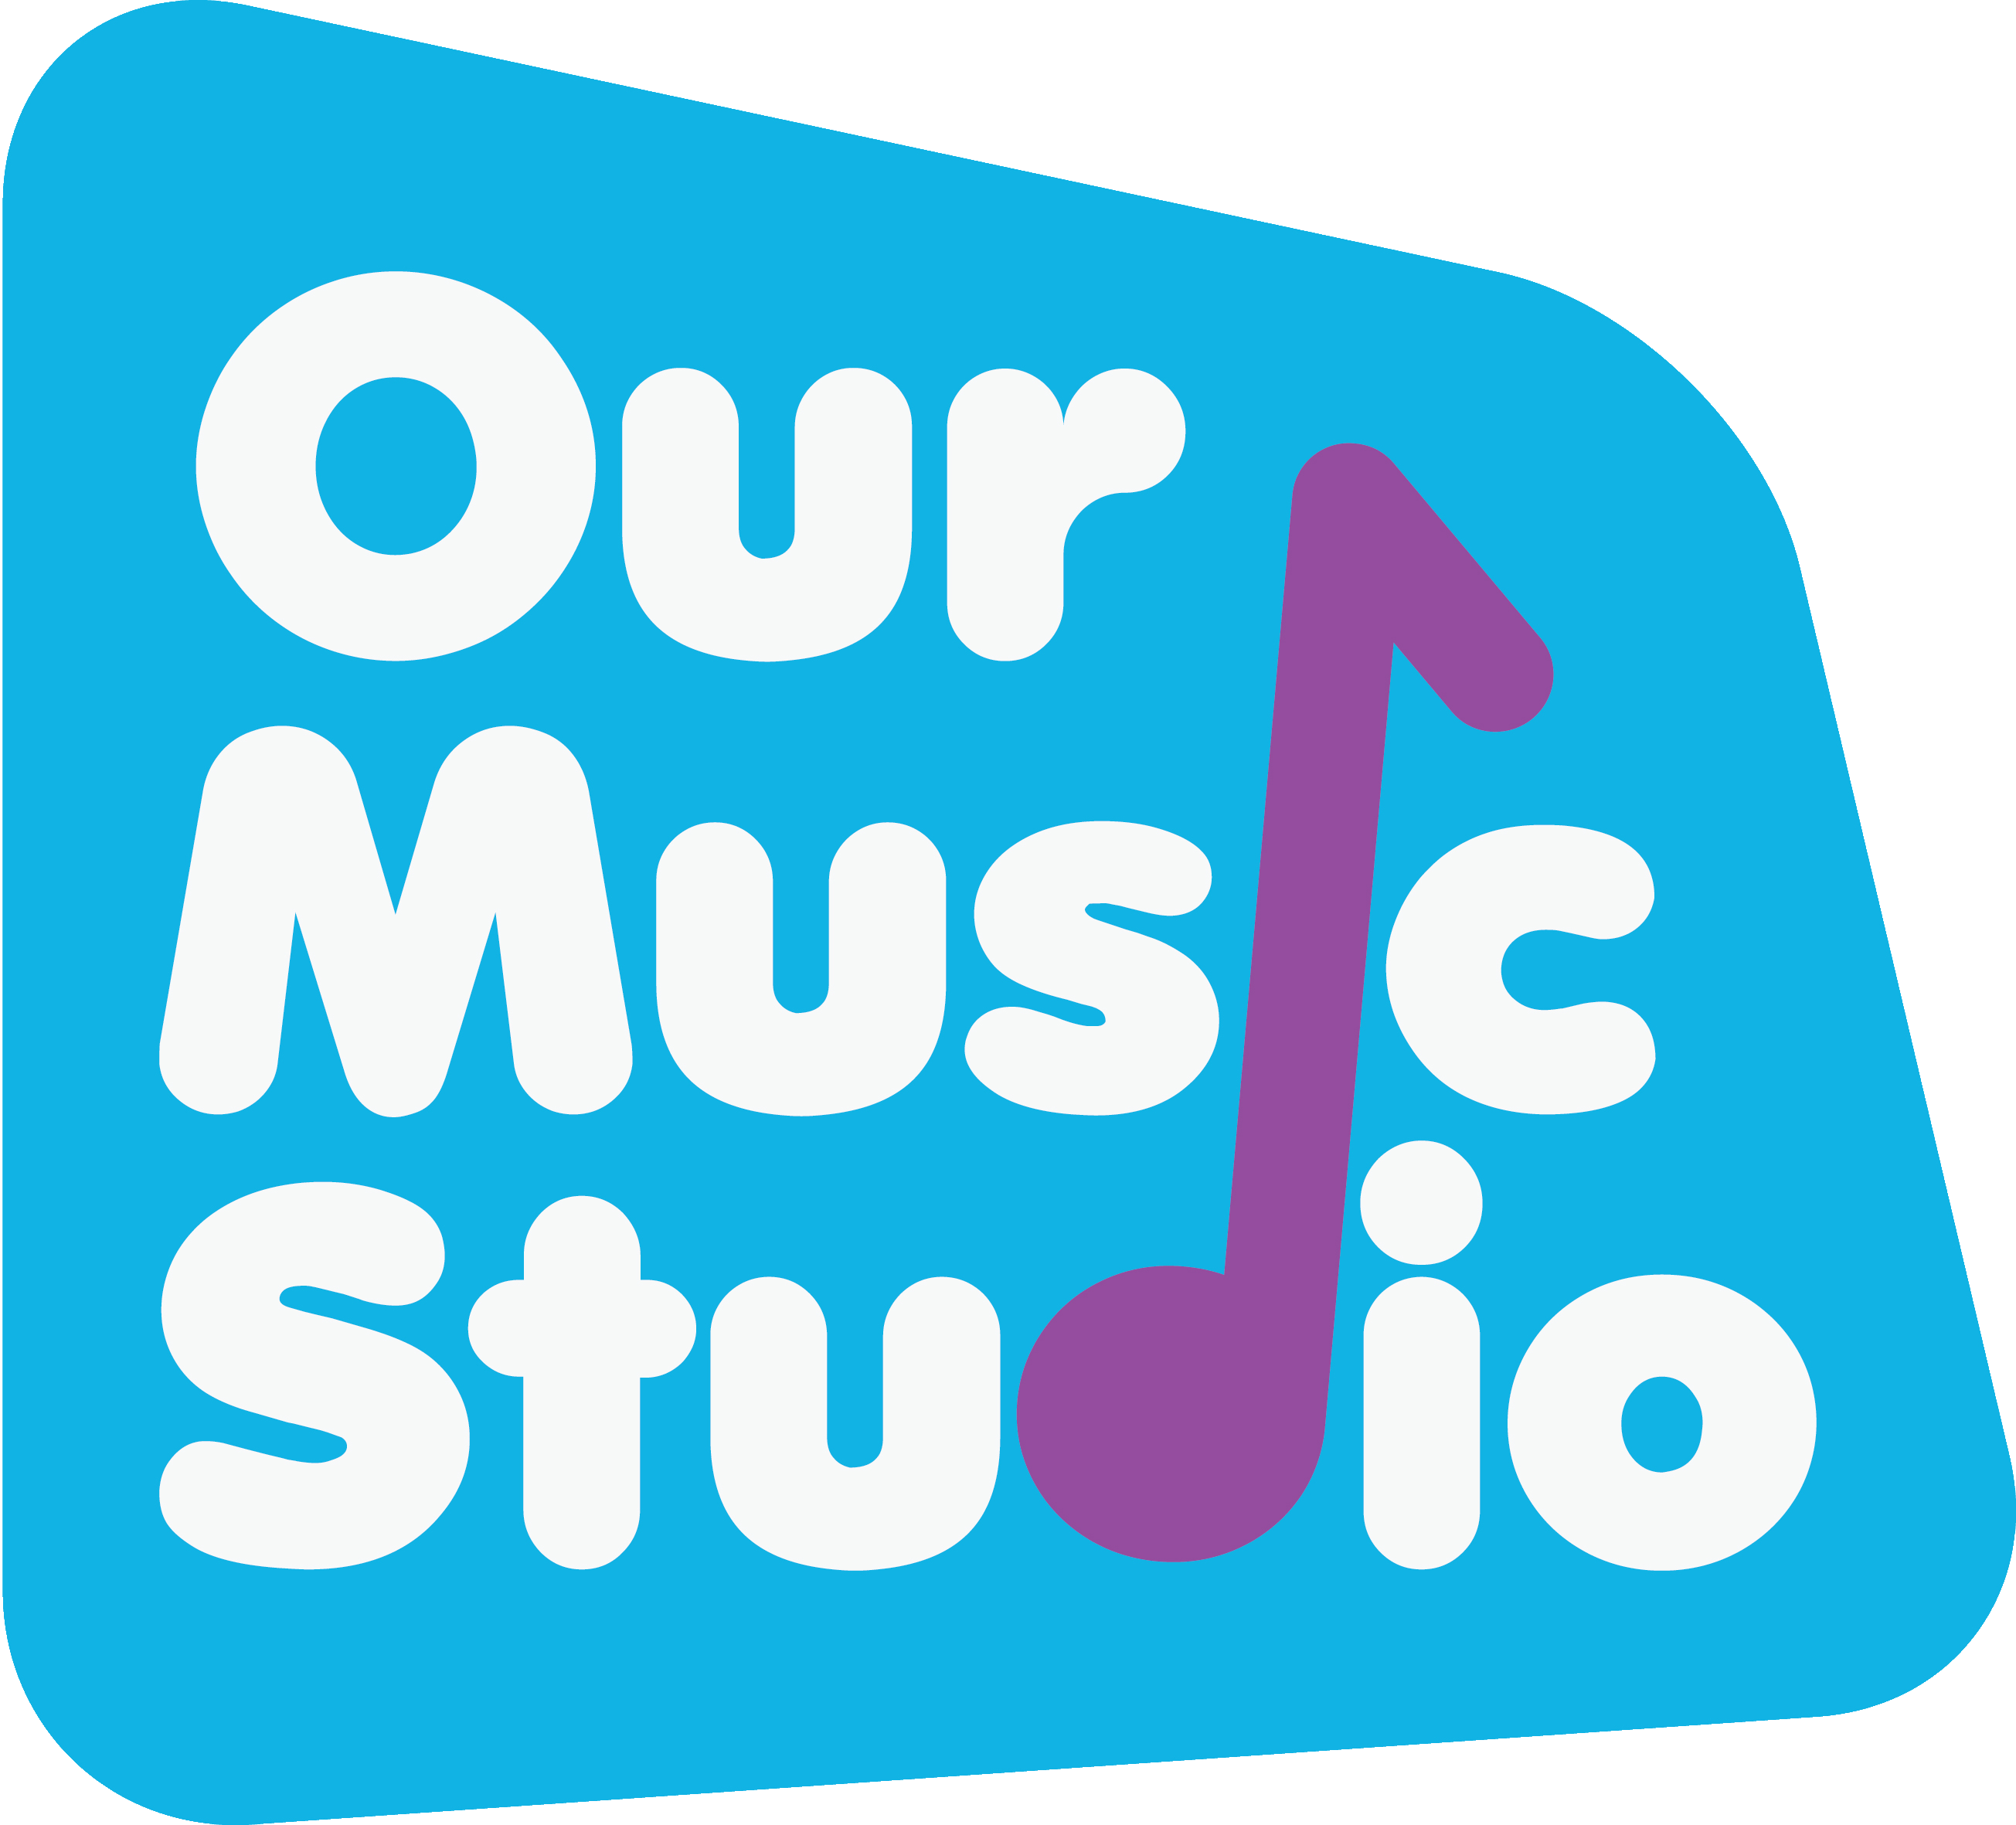 Our Music Studio